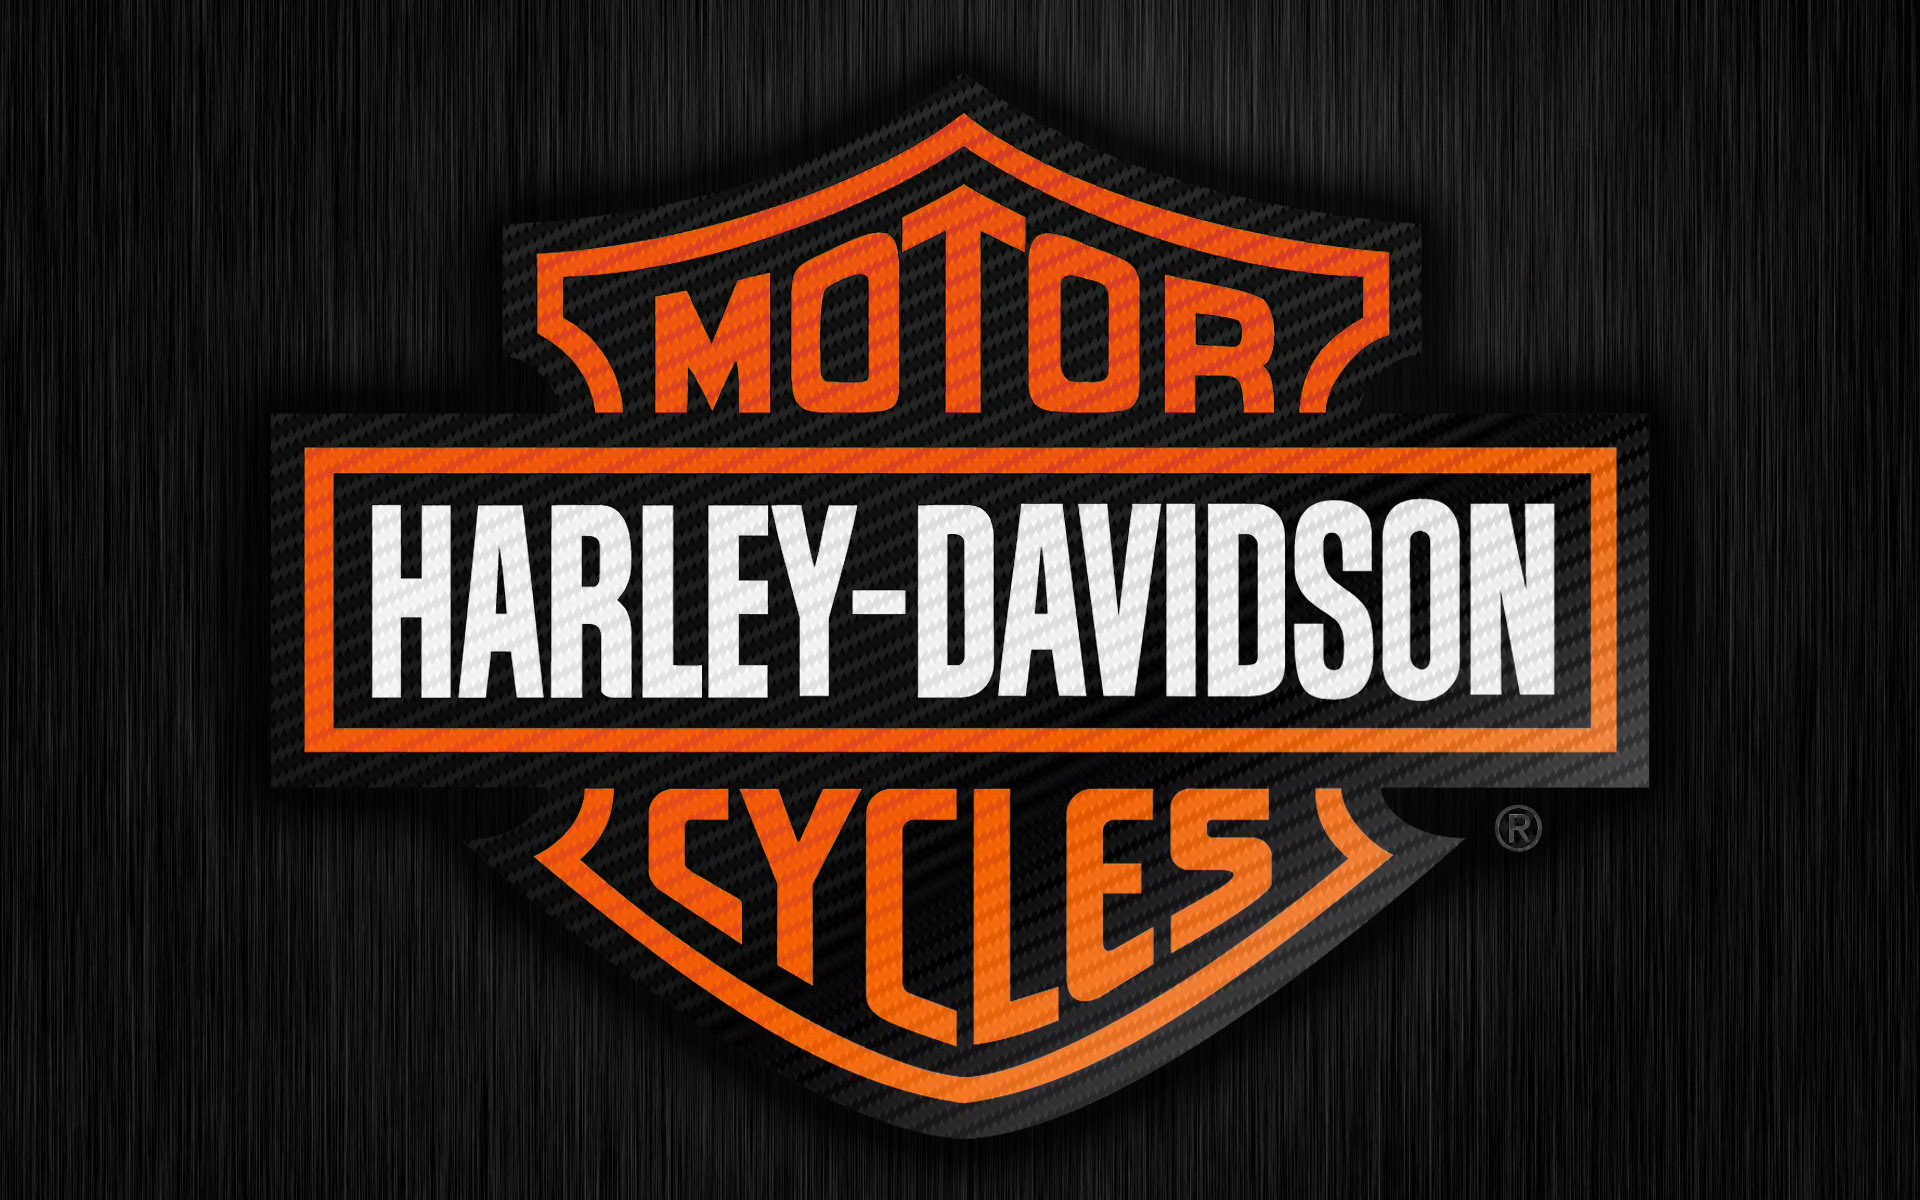 Harley davidson logo history logo vector free download jpg